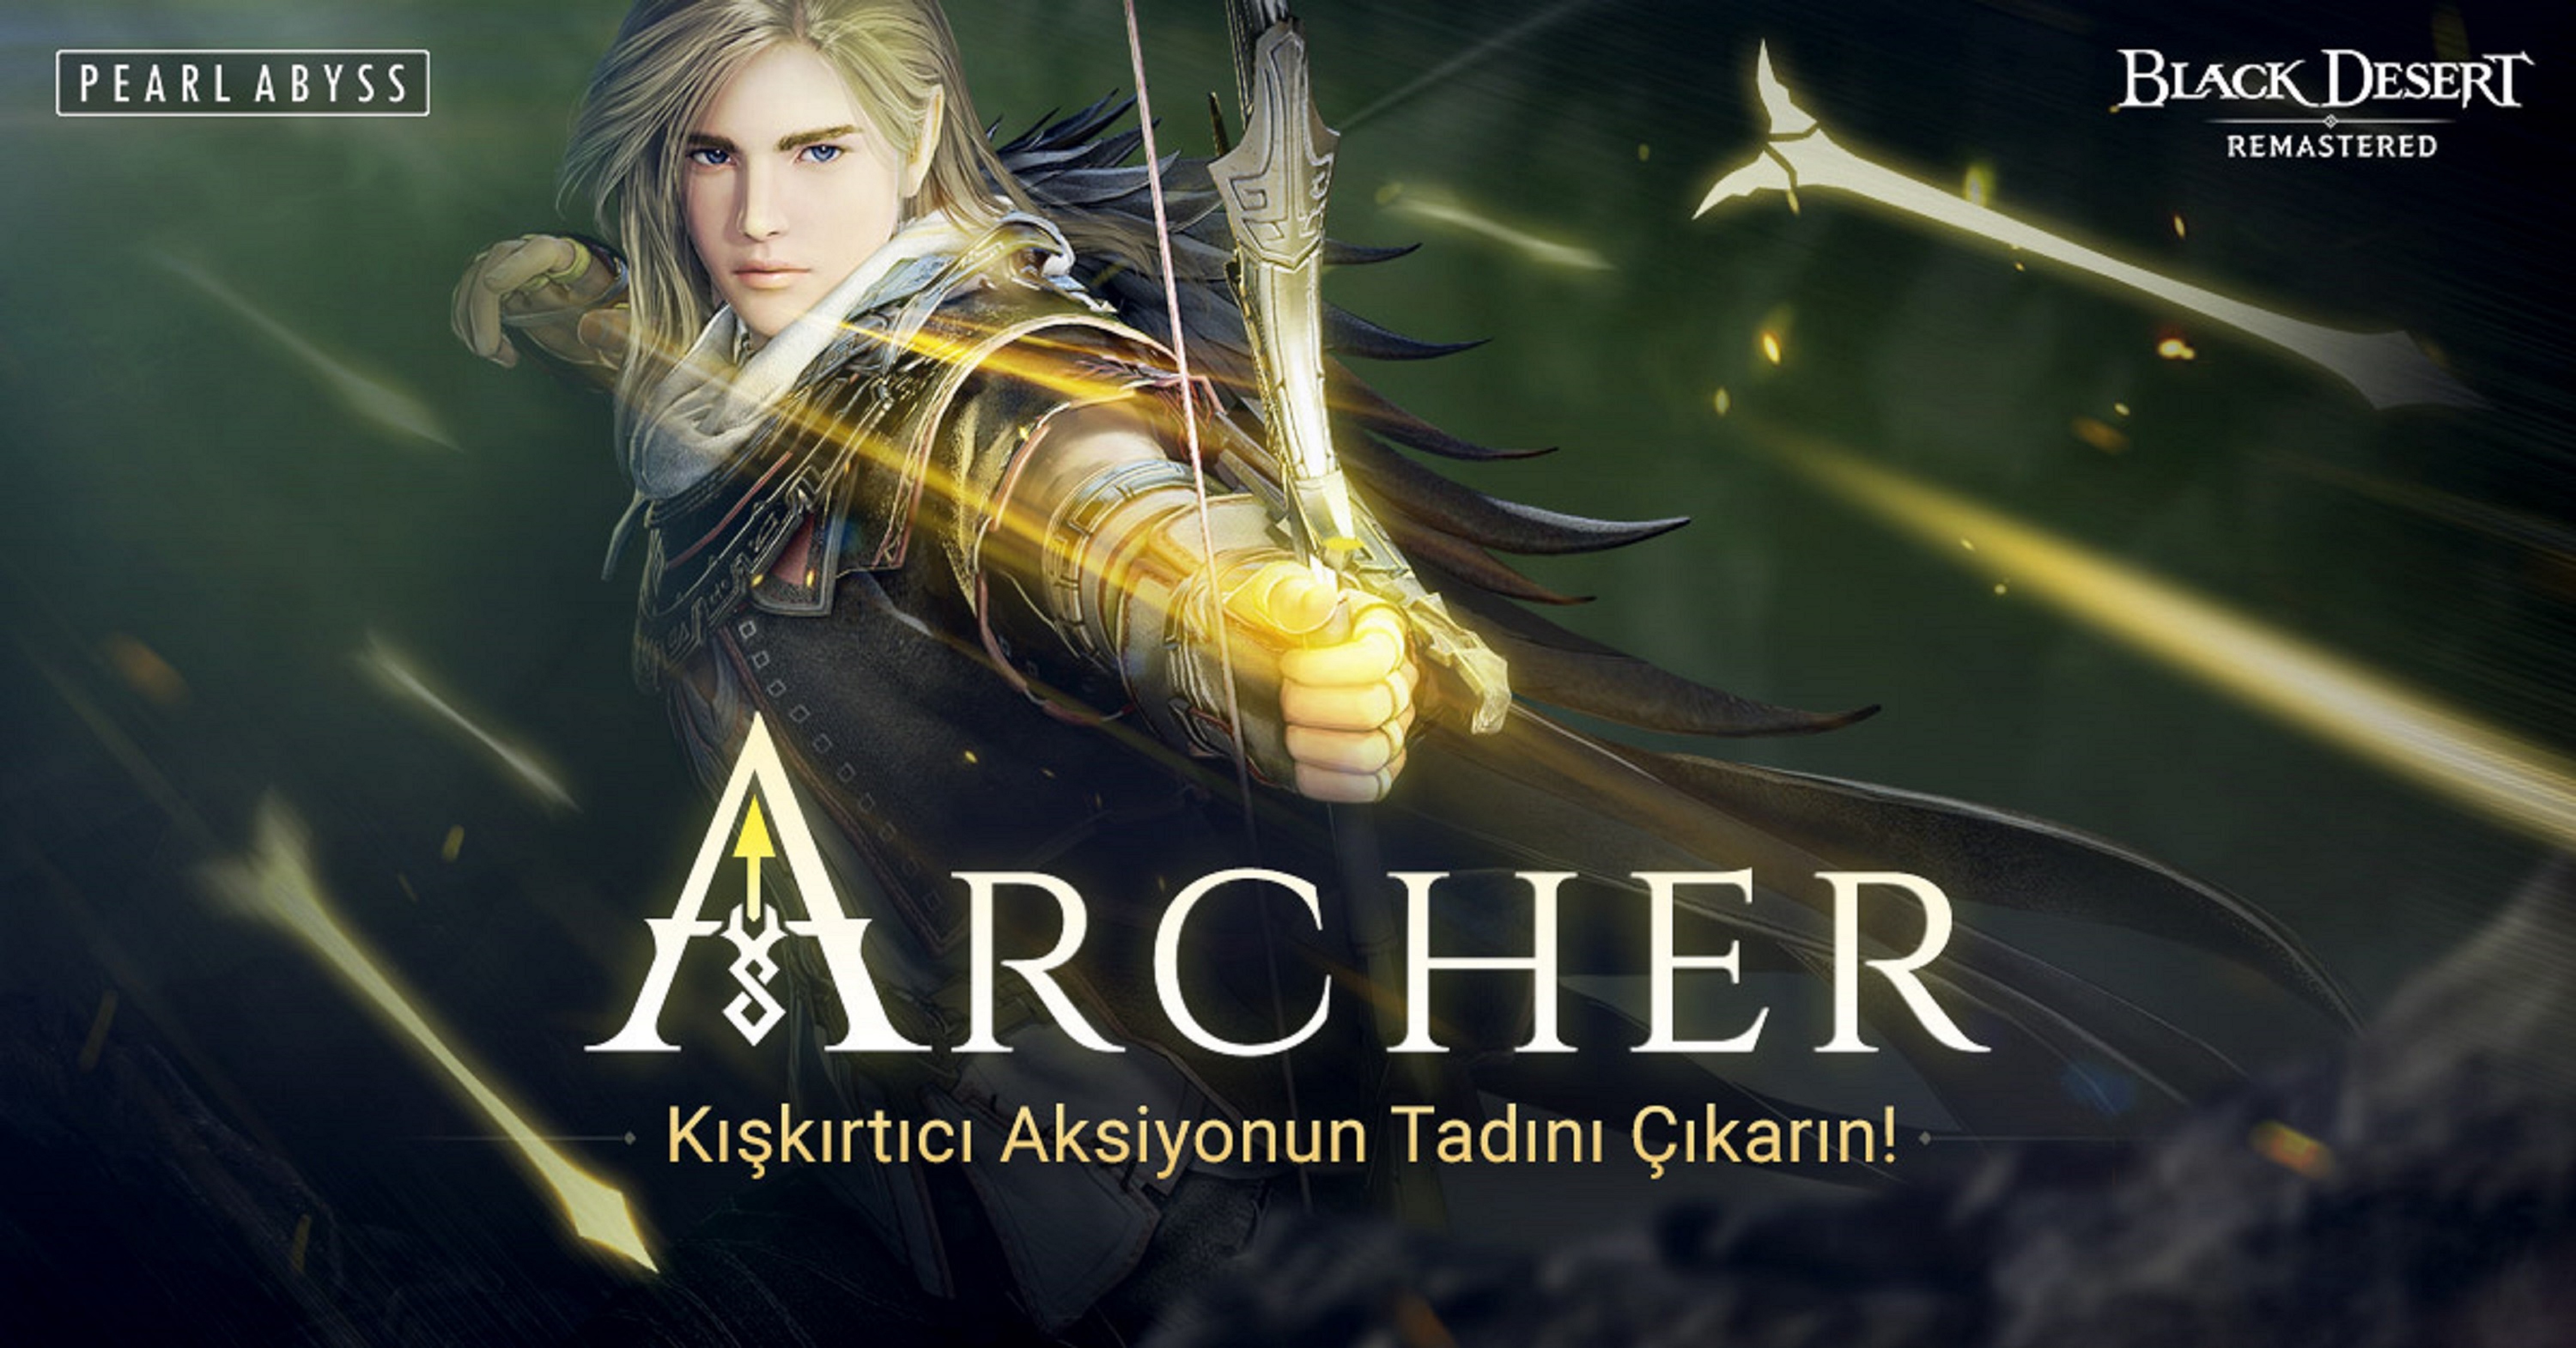 Black-Desert-Online-Archer-2